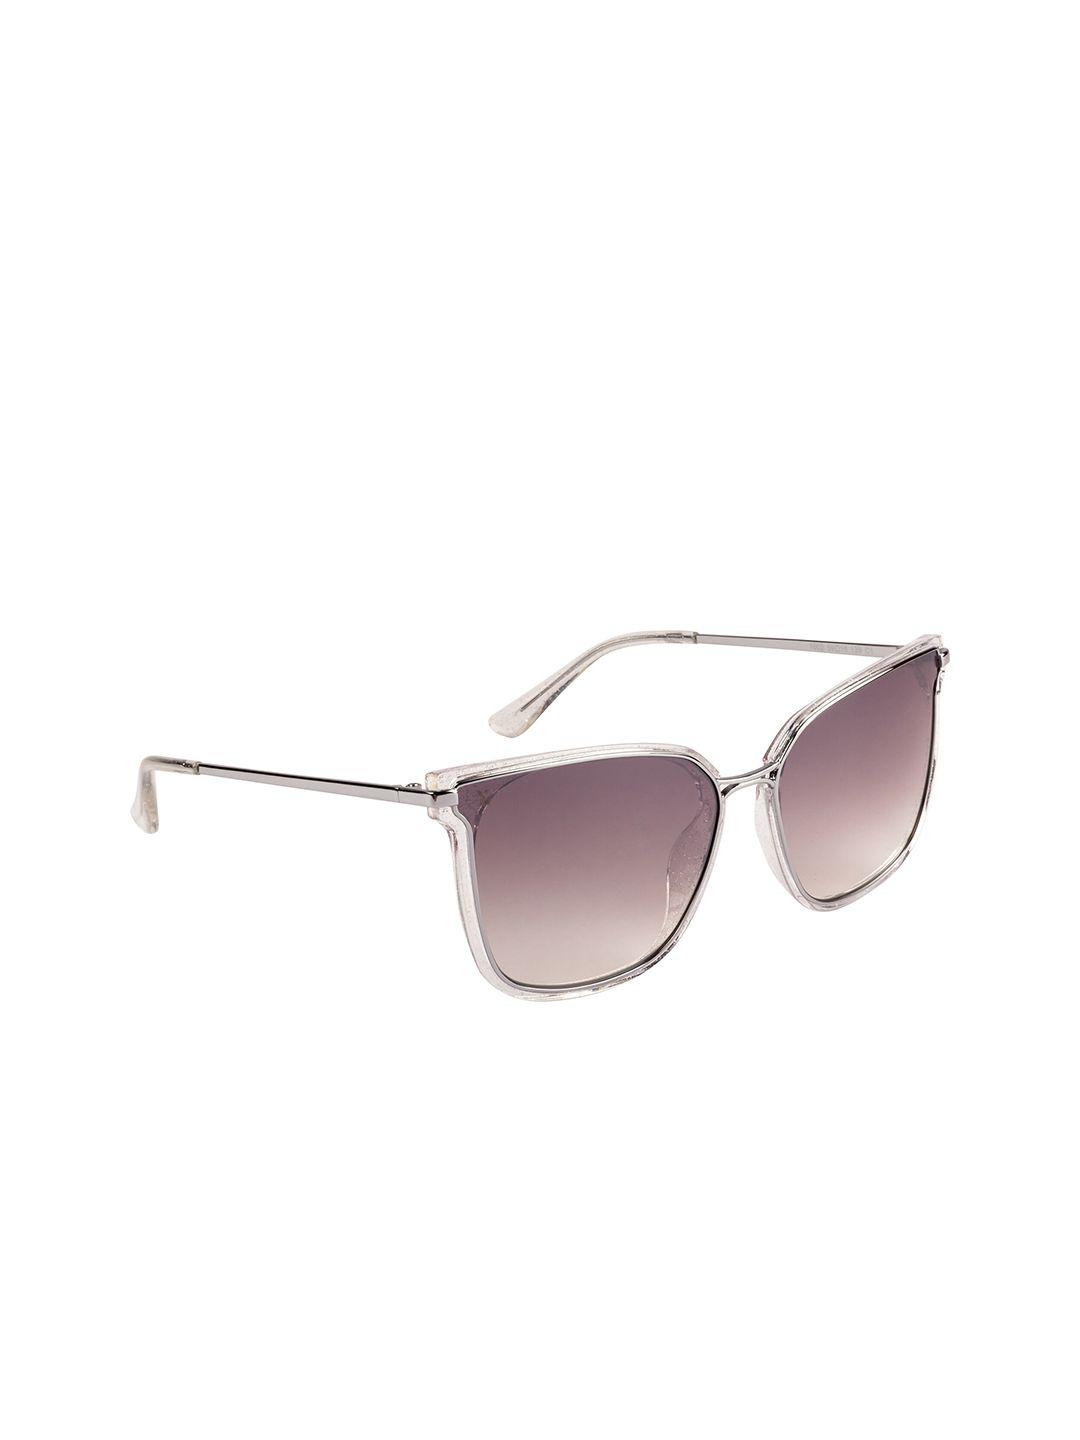 xpres women brown lens & silver-toned full rim wayfarer sunglasses with uv protected lens